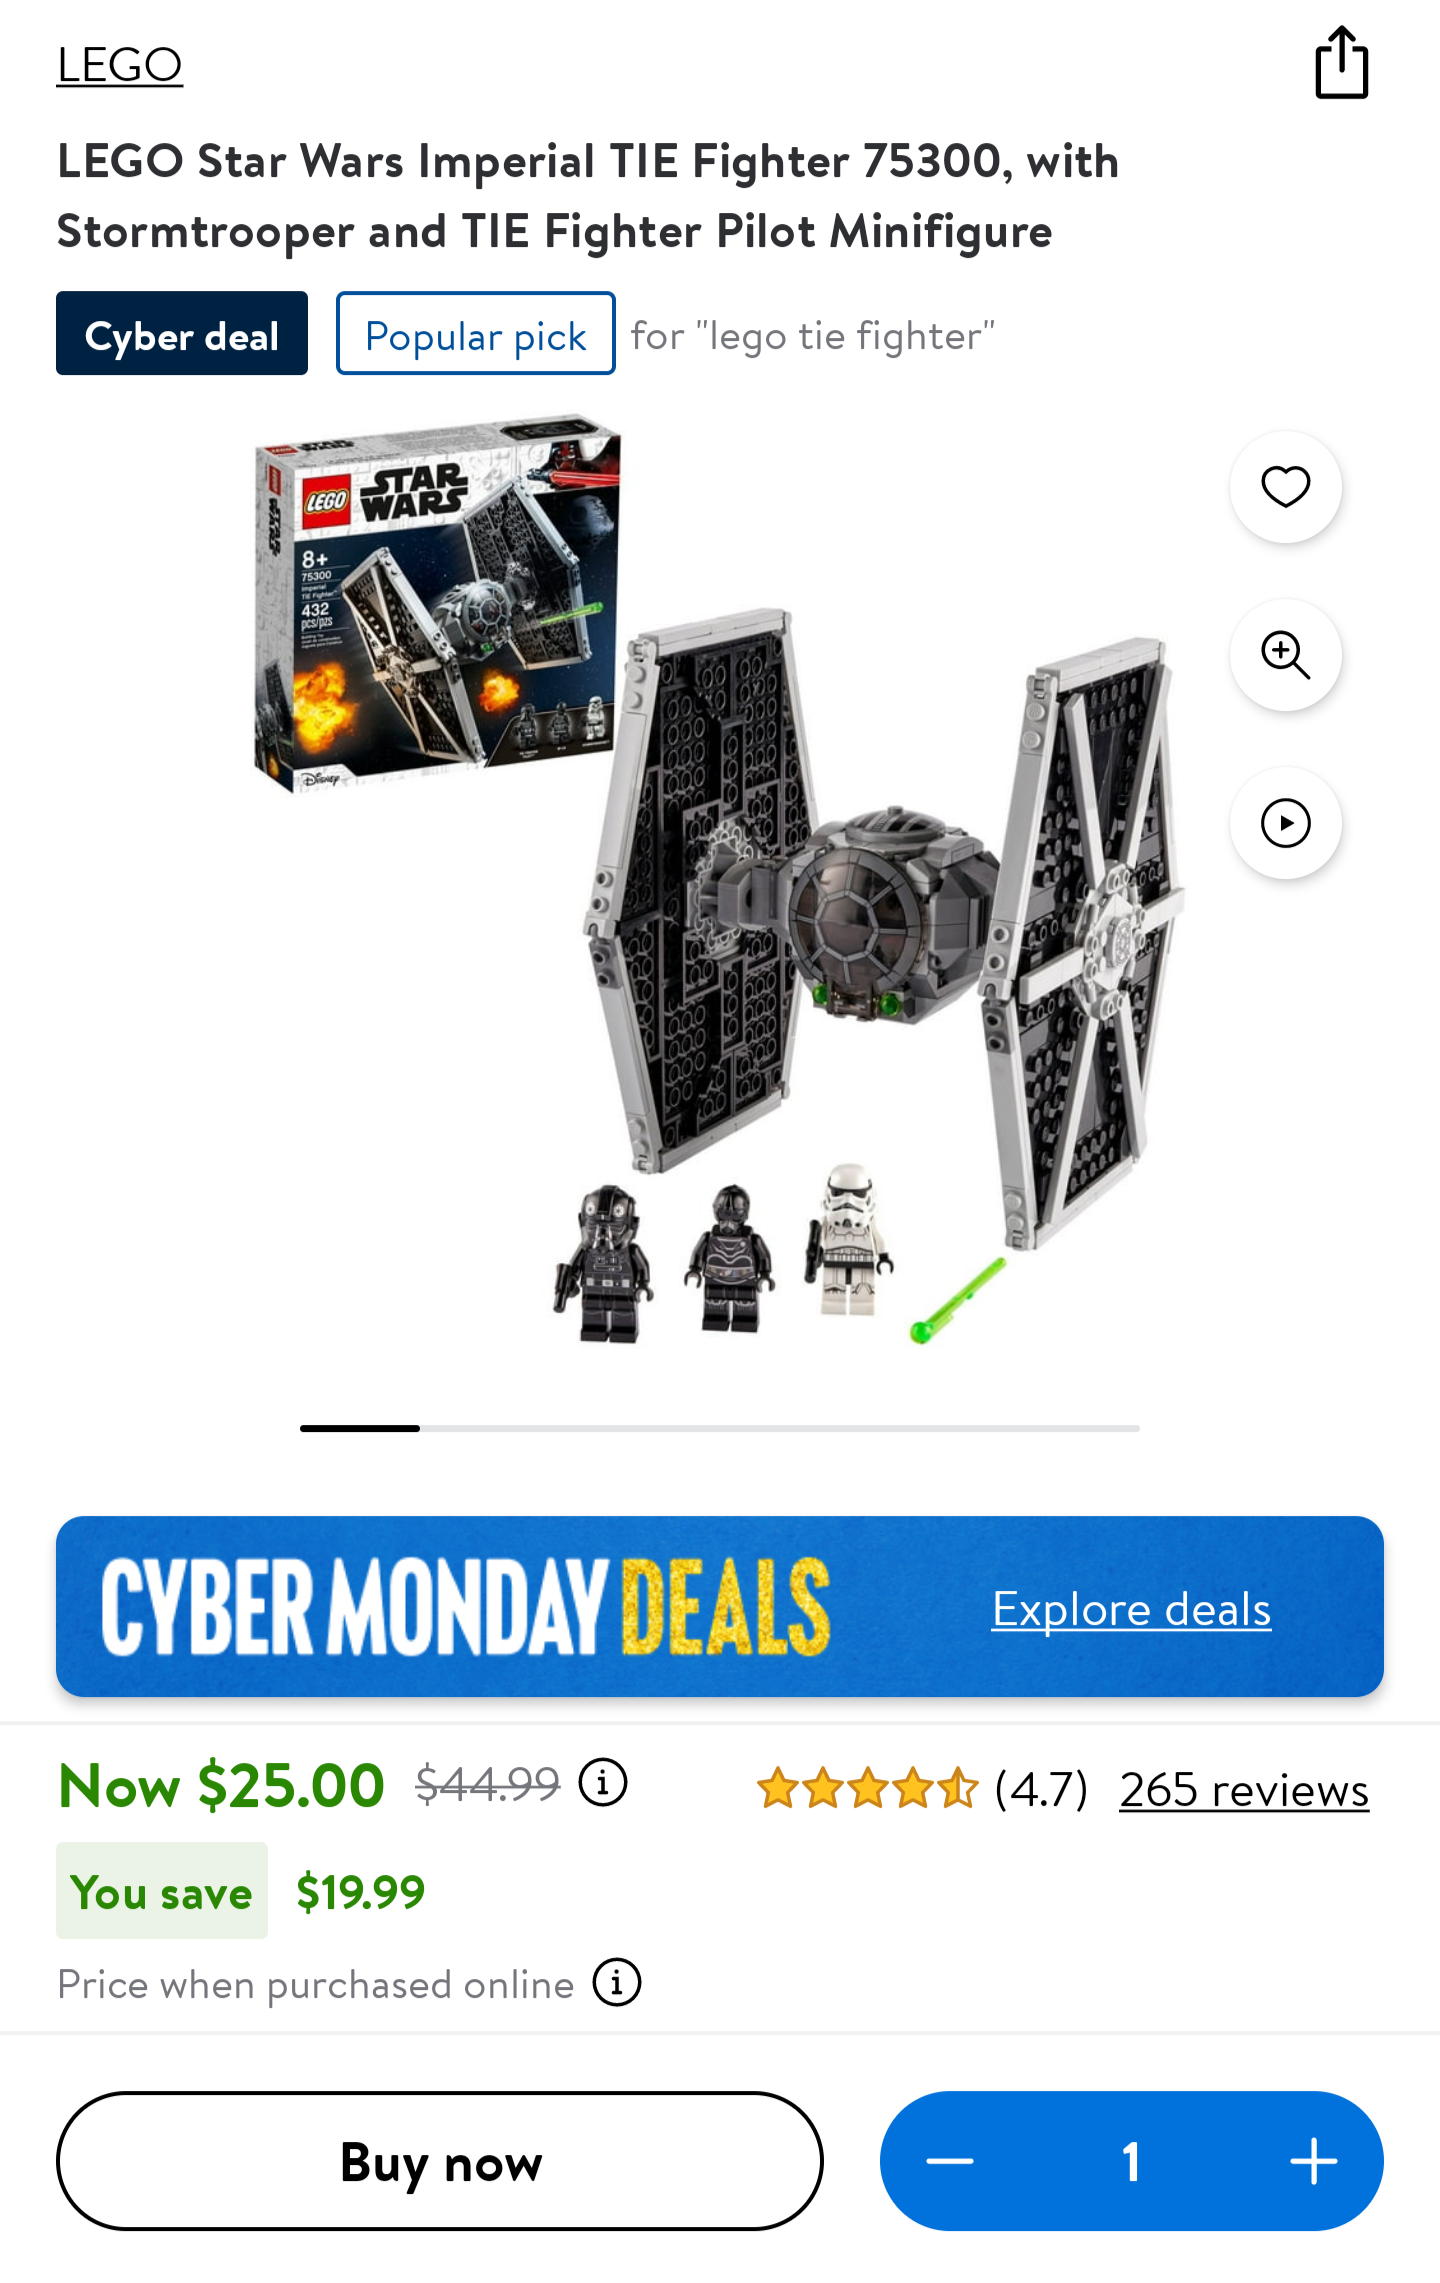 LEGO Star Wars Imperial TIE Fighter 75300 $25.00